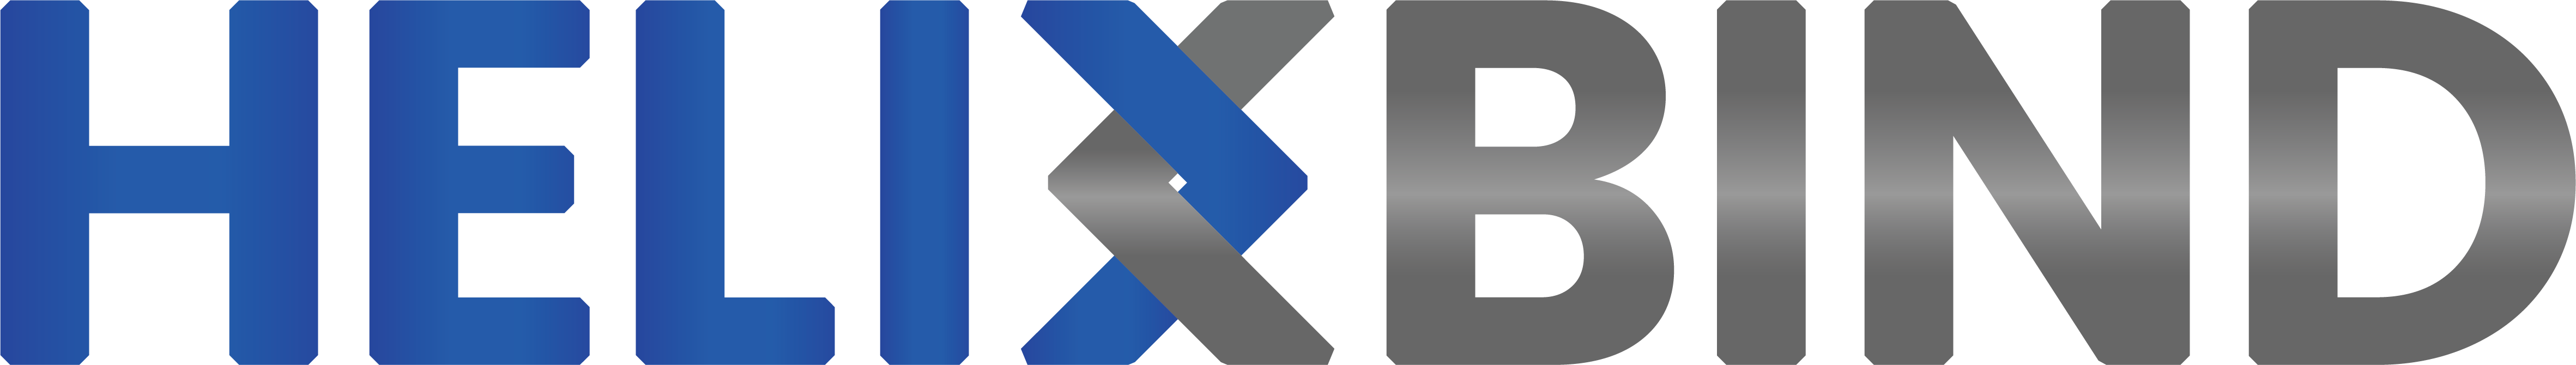 HelixBind_Logo_AS2-no BG (2018).png